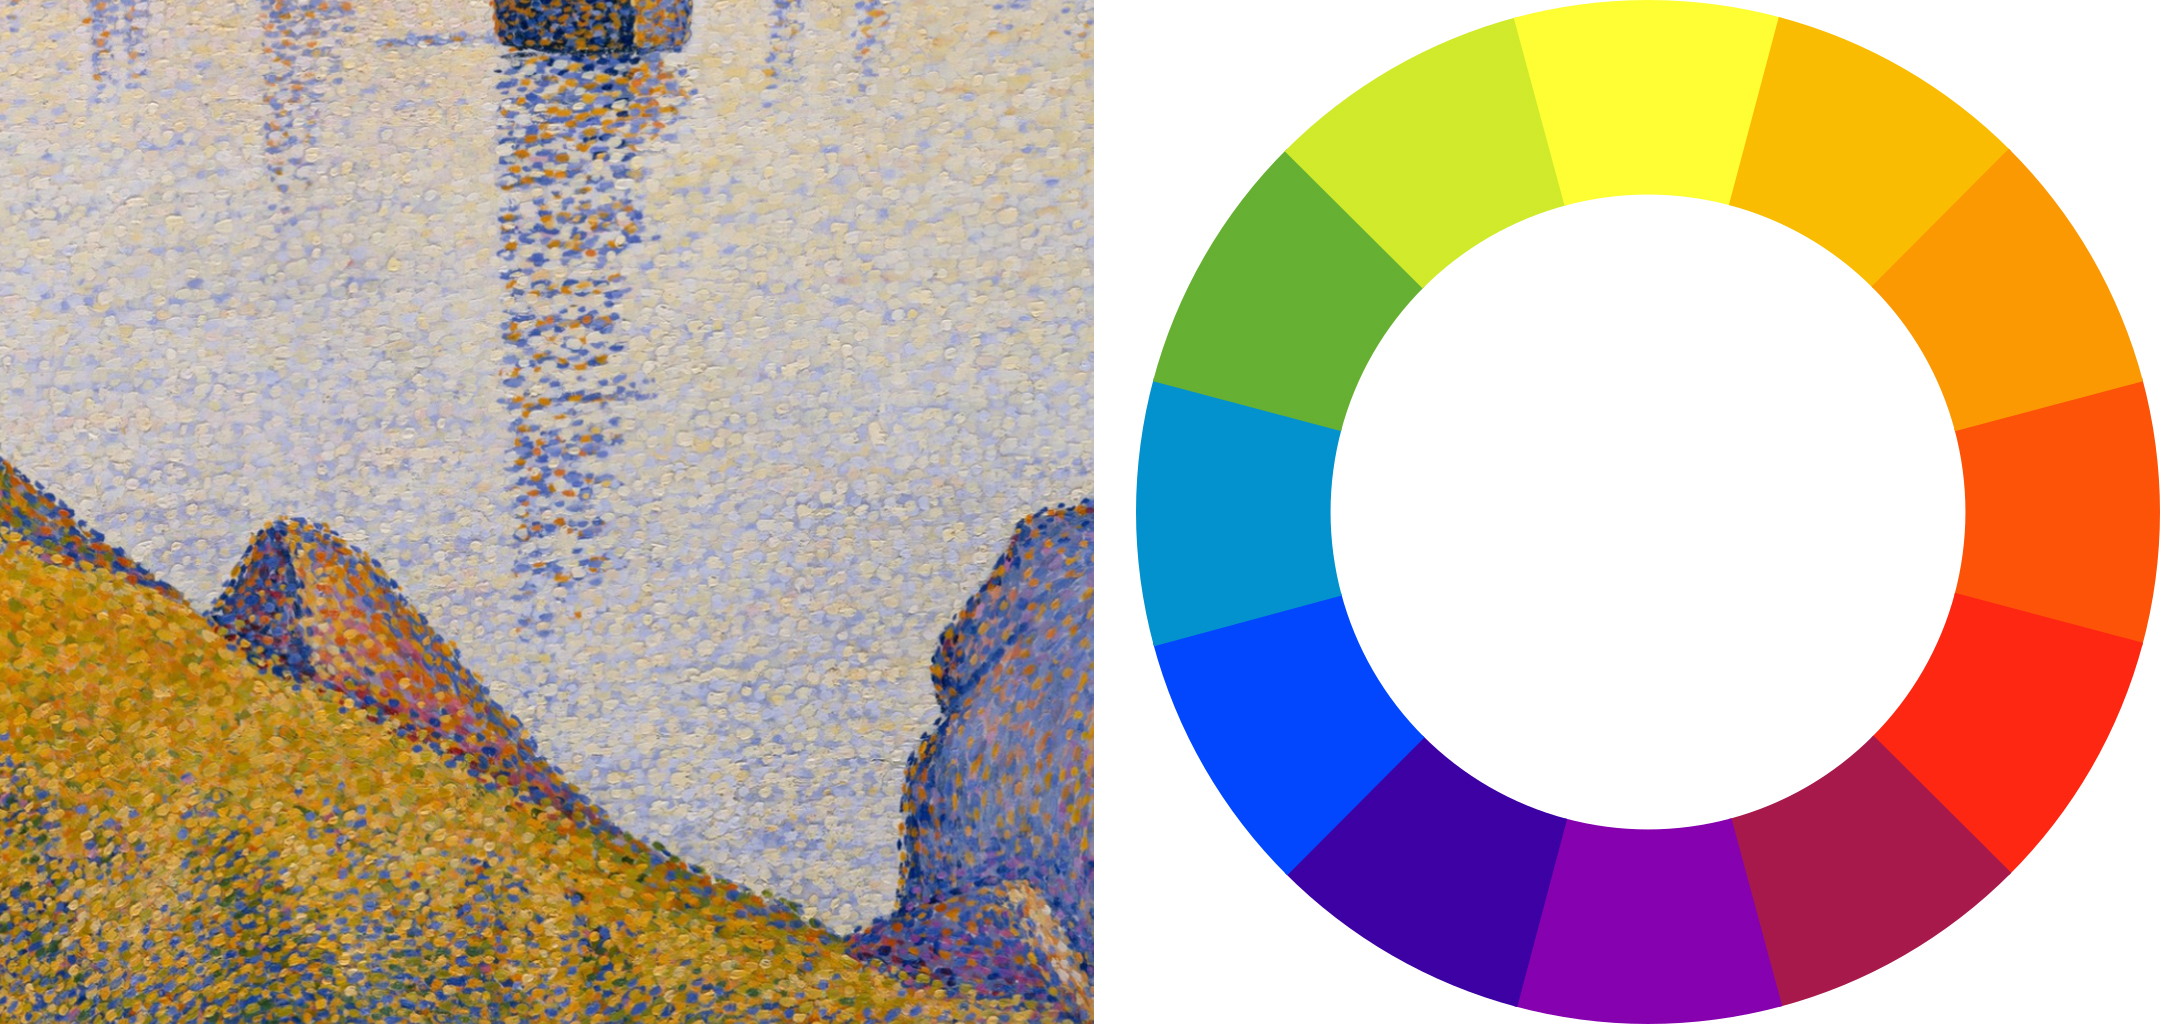 Left: Paul Signac, Evening Calm, Concarneau, Opus 220 (Allegro Maestoso), detail, 1891, oil on canvas, 64.9 x 81.3 cm (The Metropolitan Museum of Art); Right: The color wheel